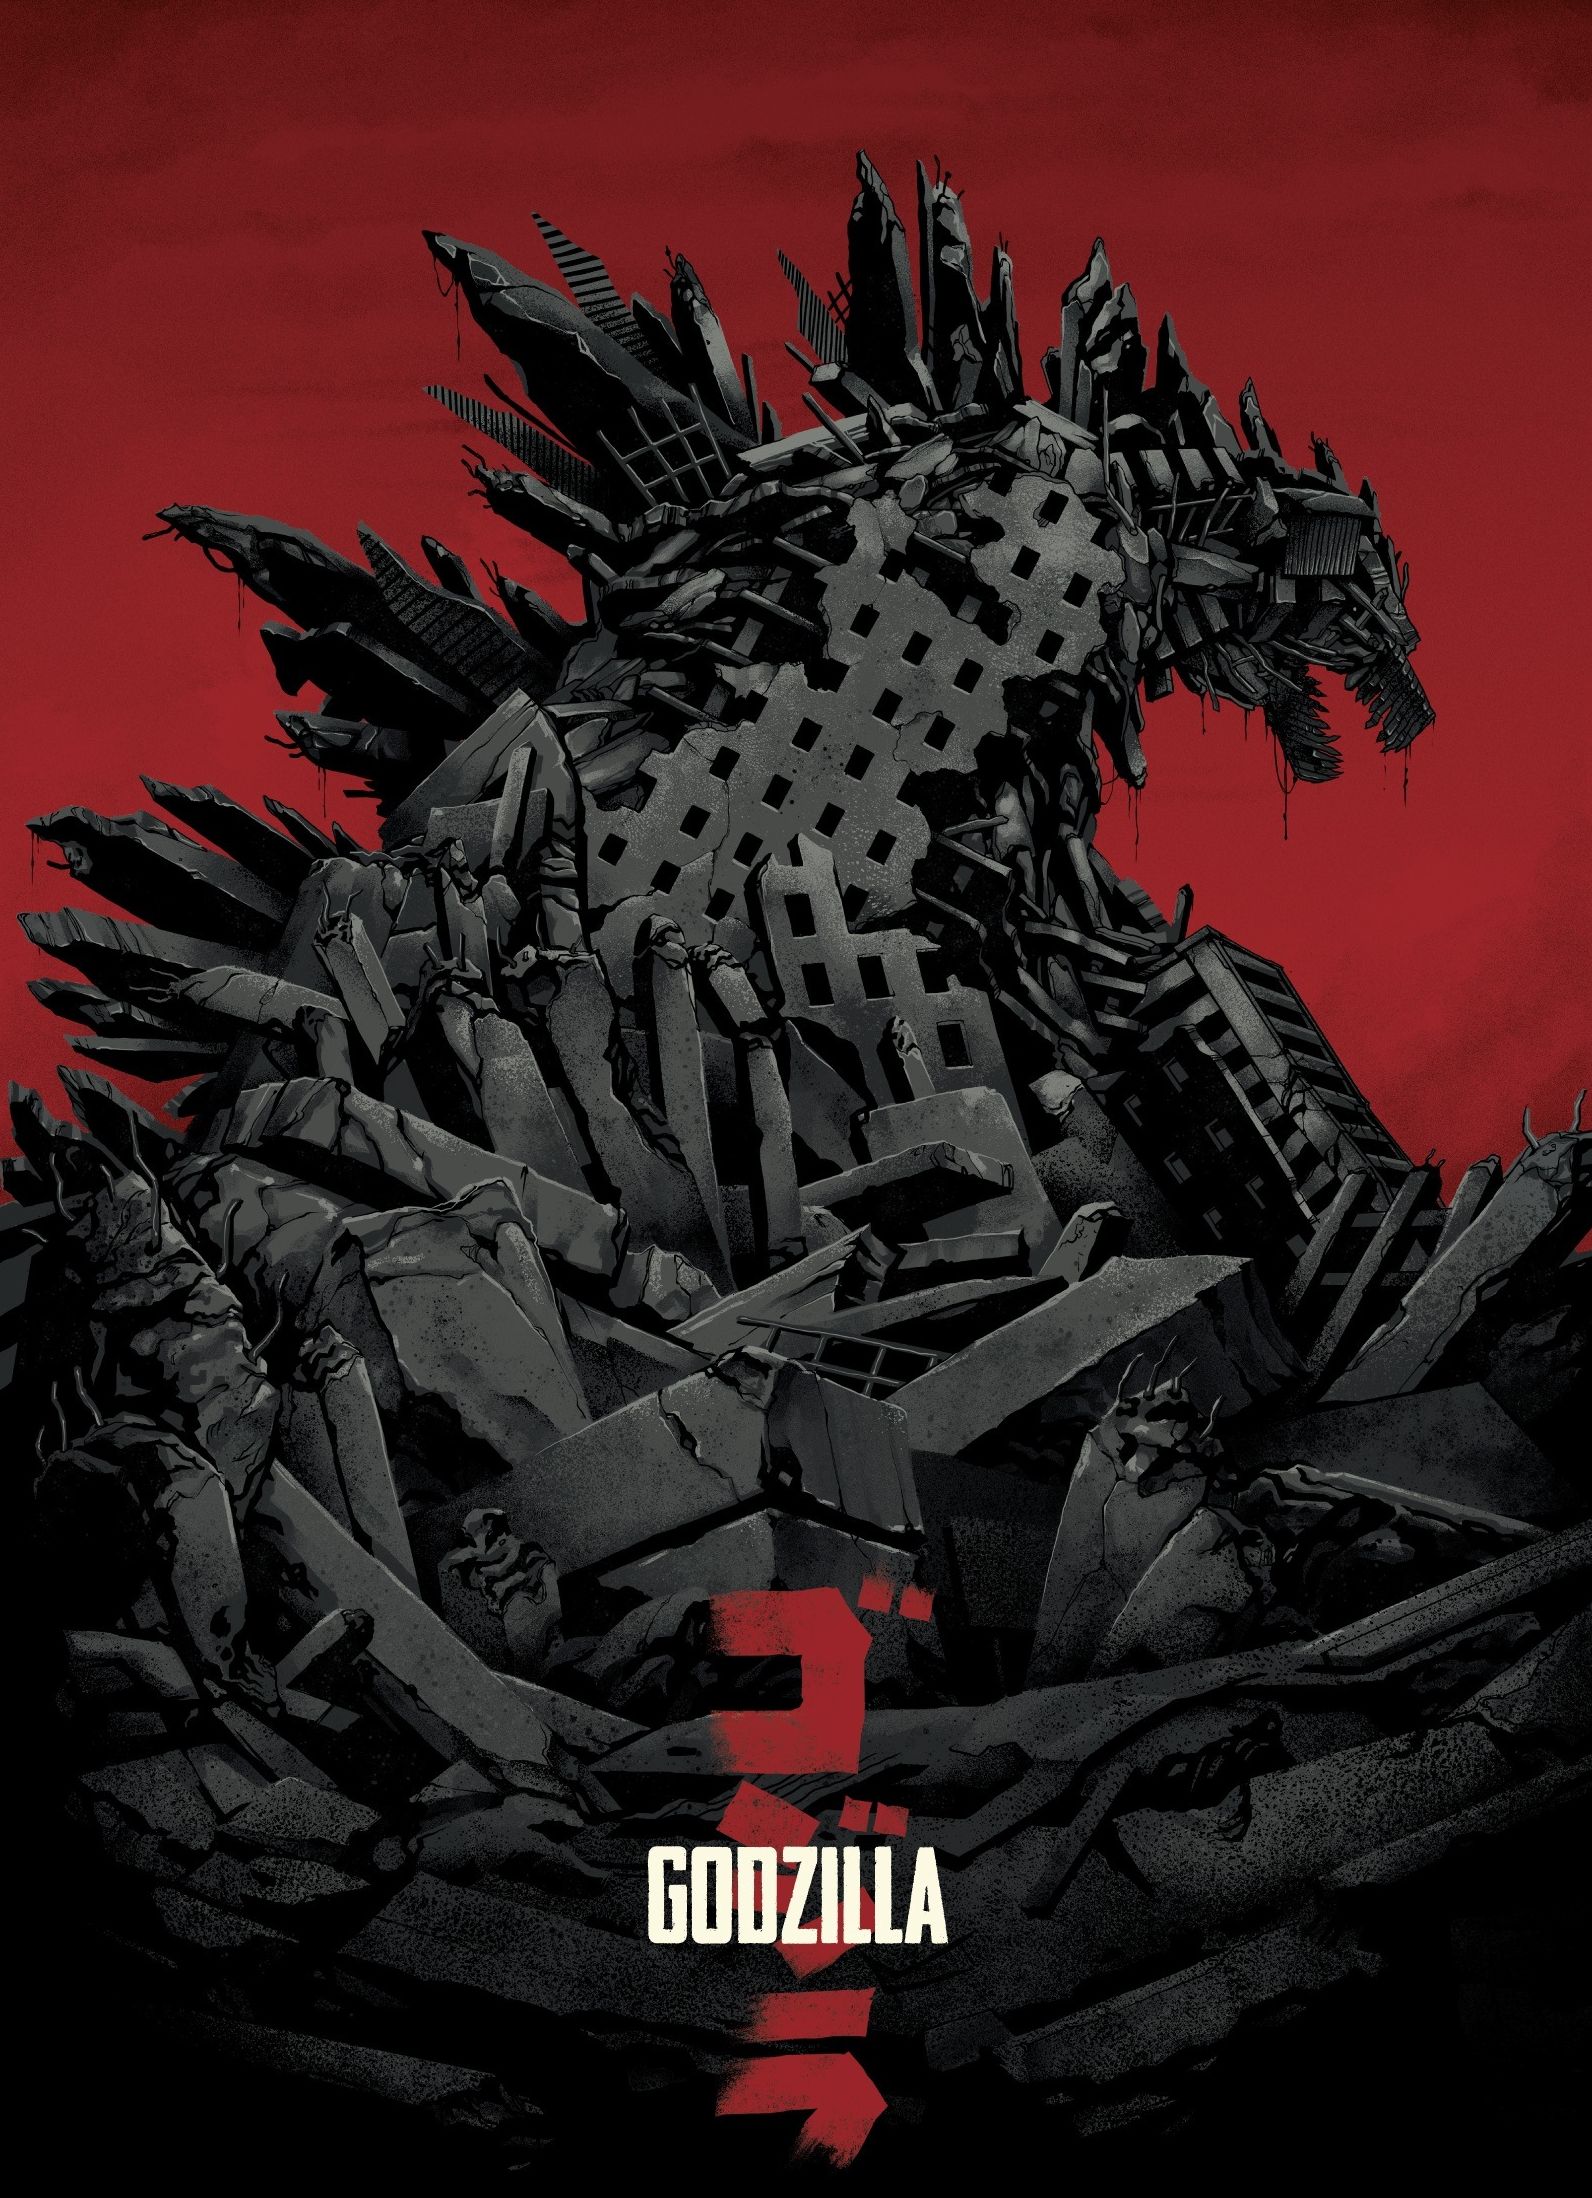 Teaser poster for Godzilla